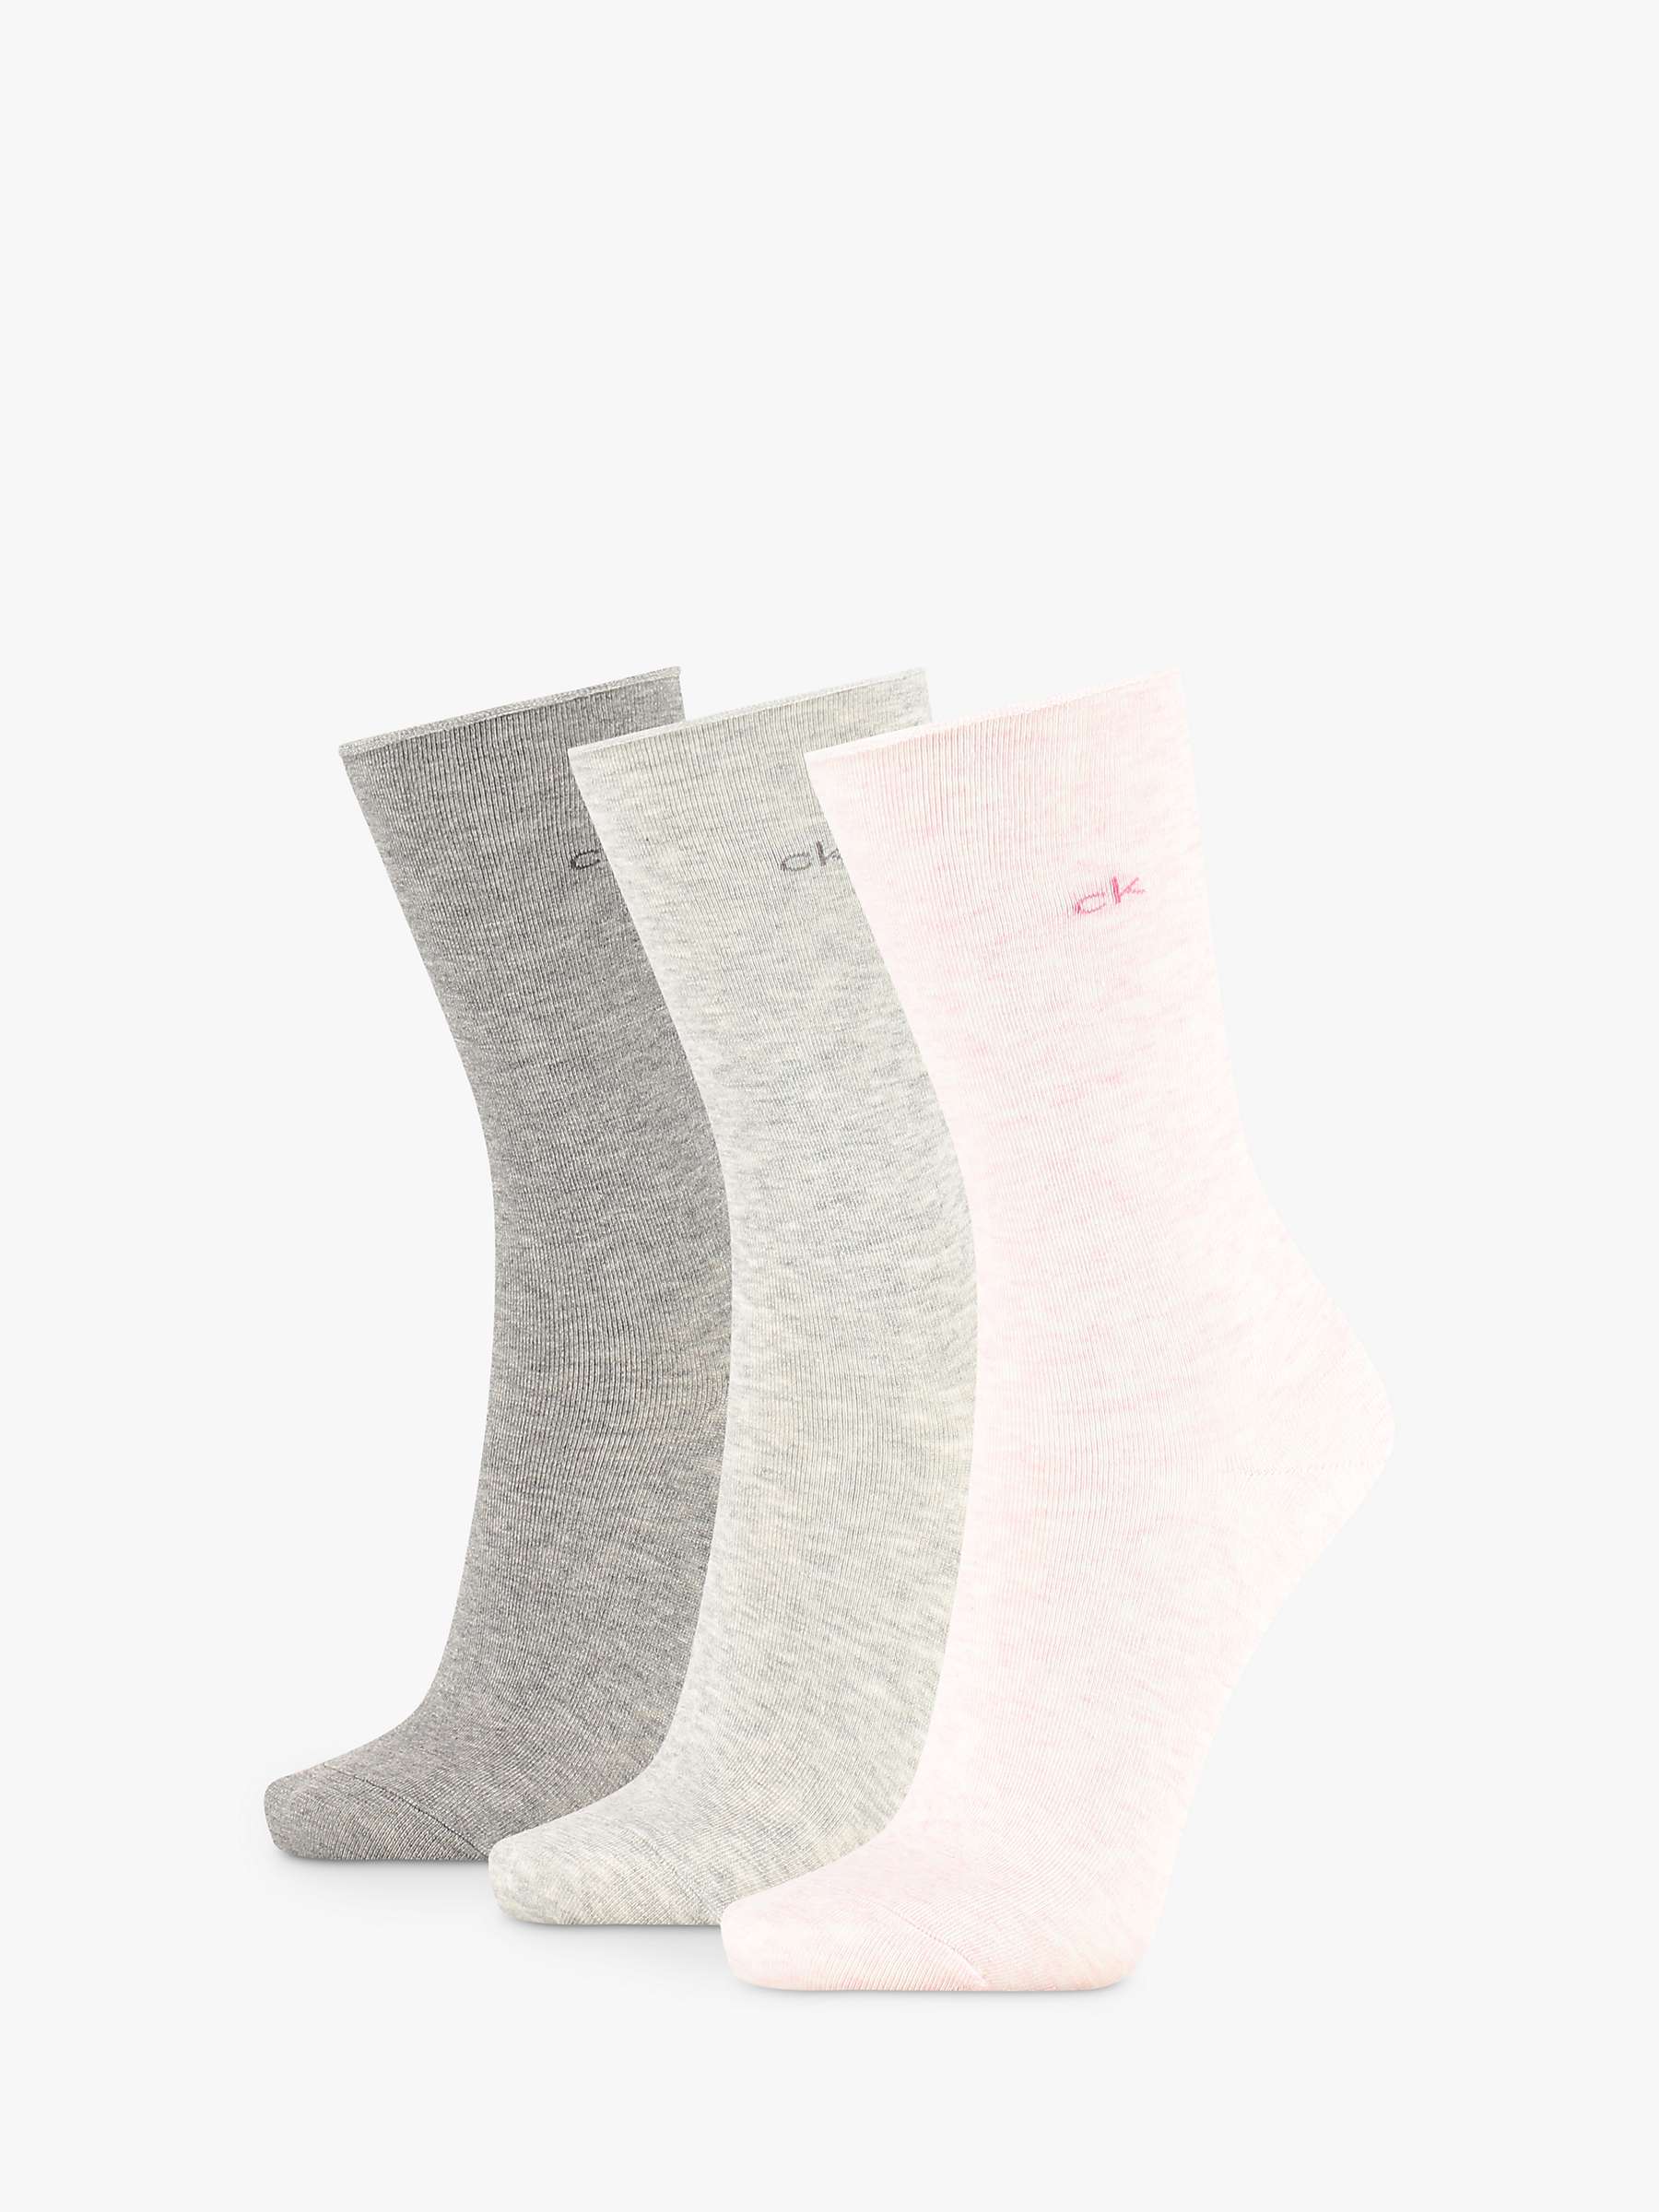 Buy Calvin Klein Emma Roll Top Ankle Socks, Pack of 3 Online at johnlewis.com